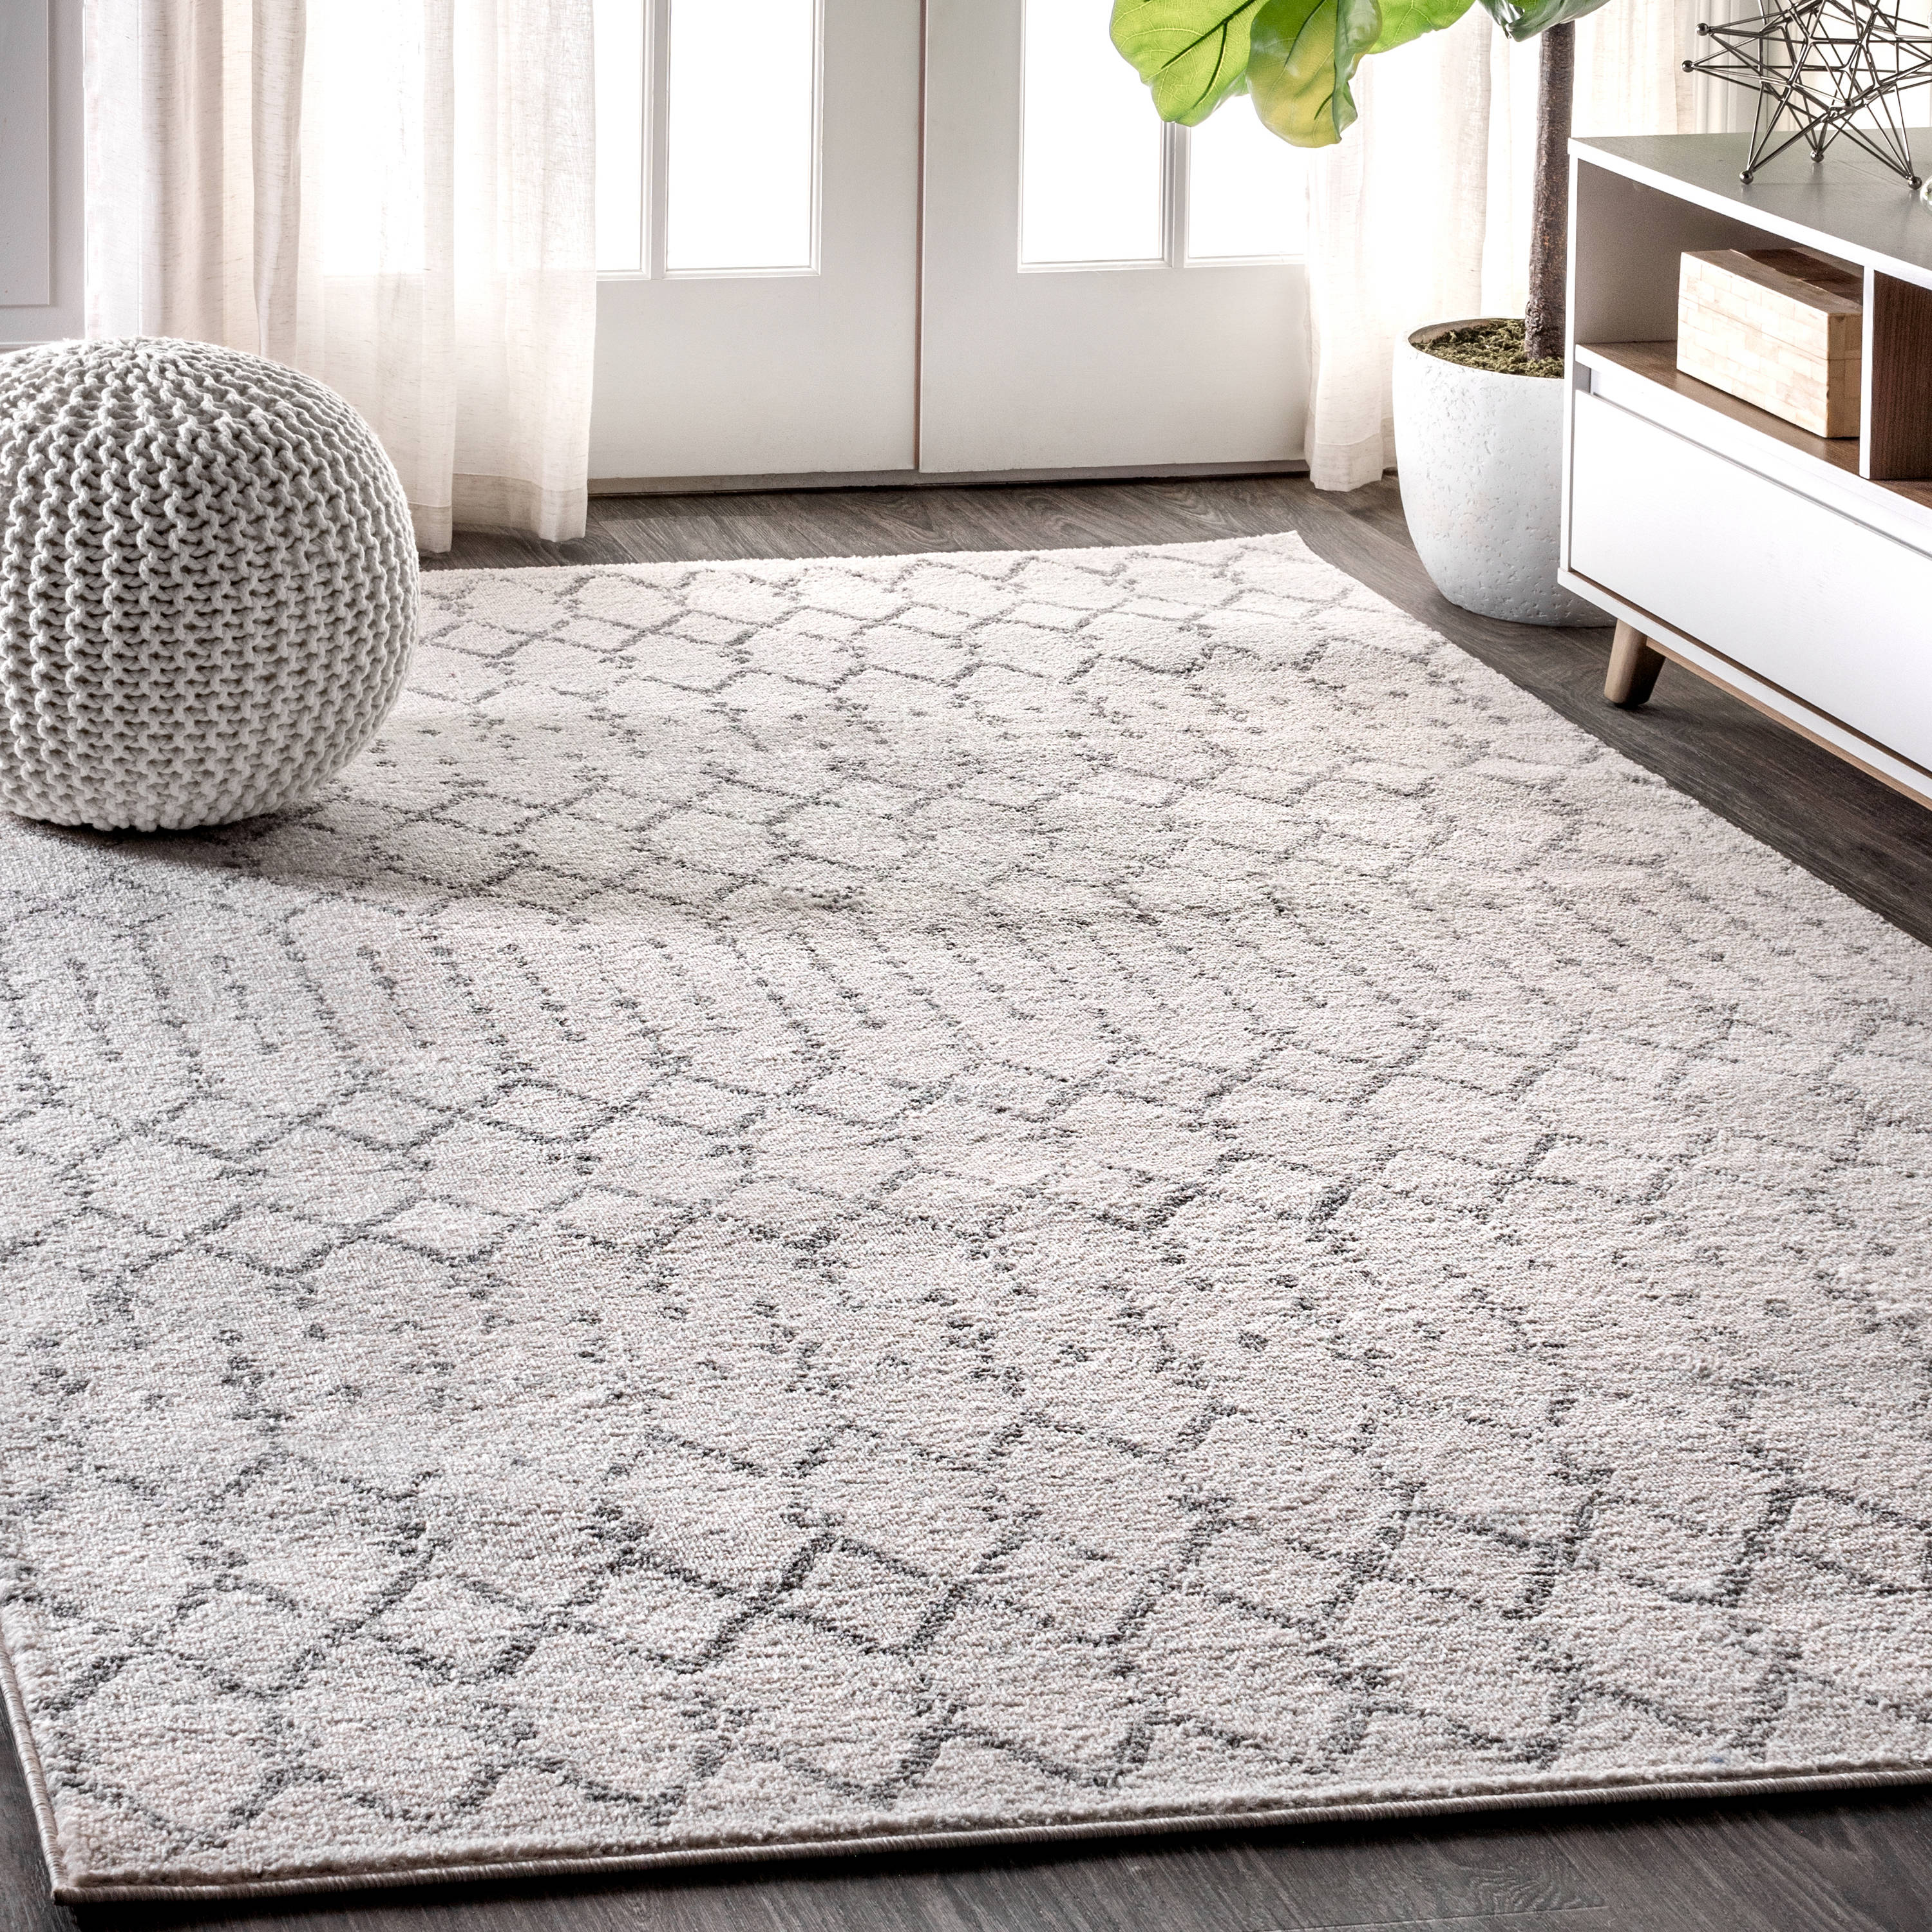 Modern Minimalist Line Carpet, Non-slip Kitchen Mat Floor Cushion